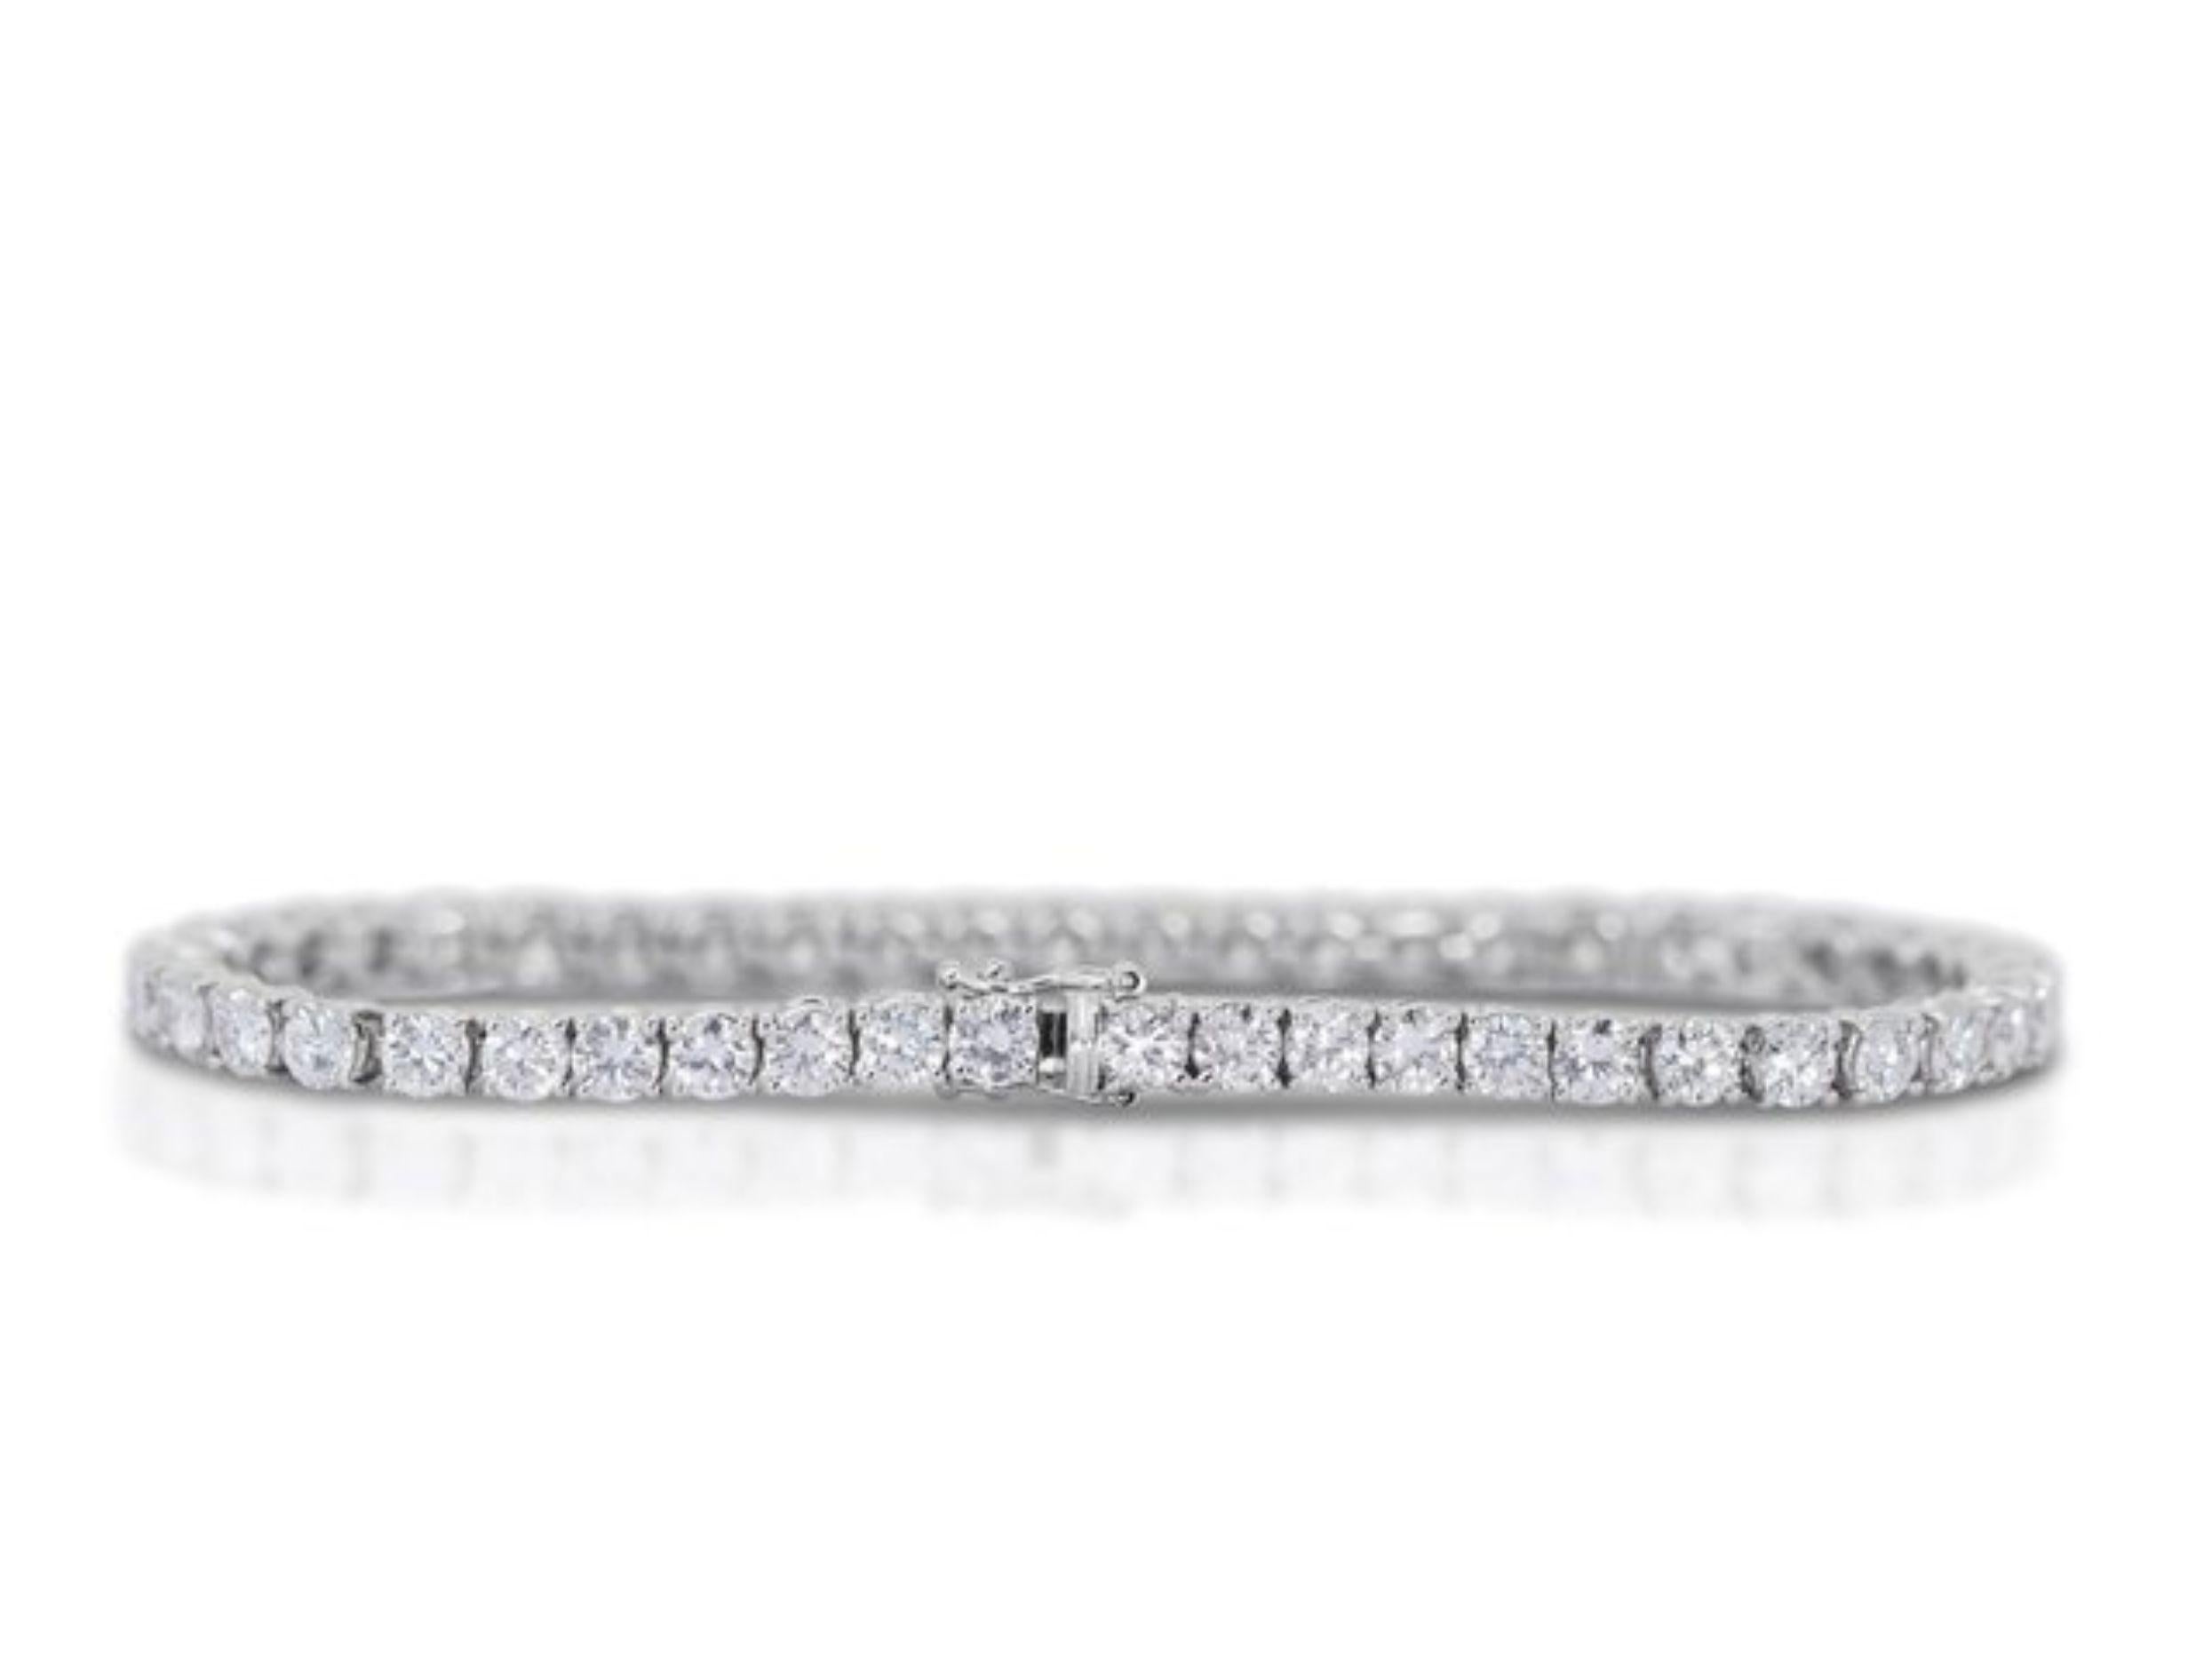 Captivating 8.11ct Round Brilliant Diamond Bracelet in 14K White Gold 3